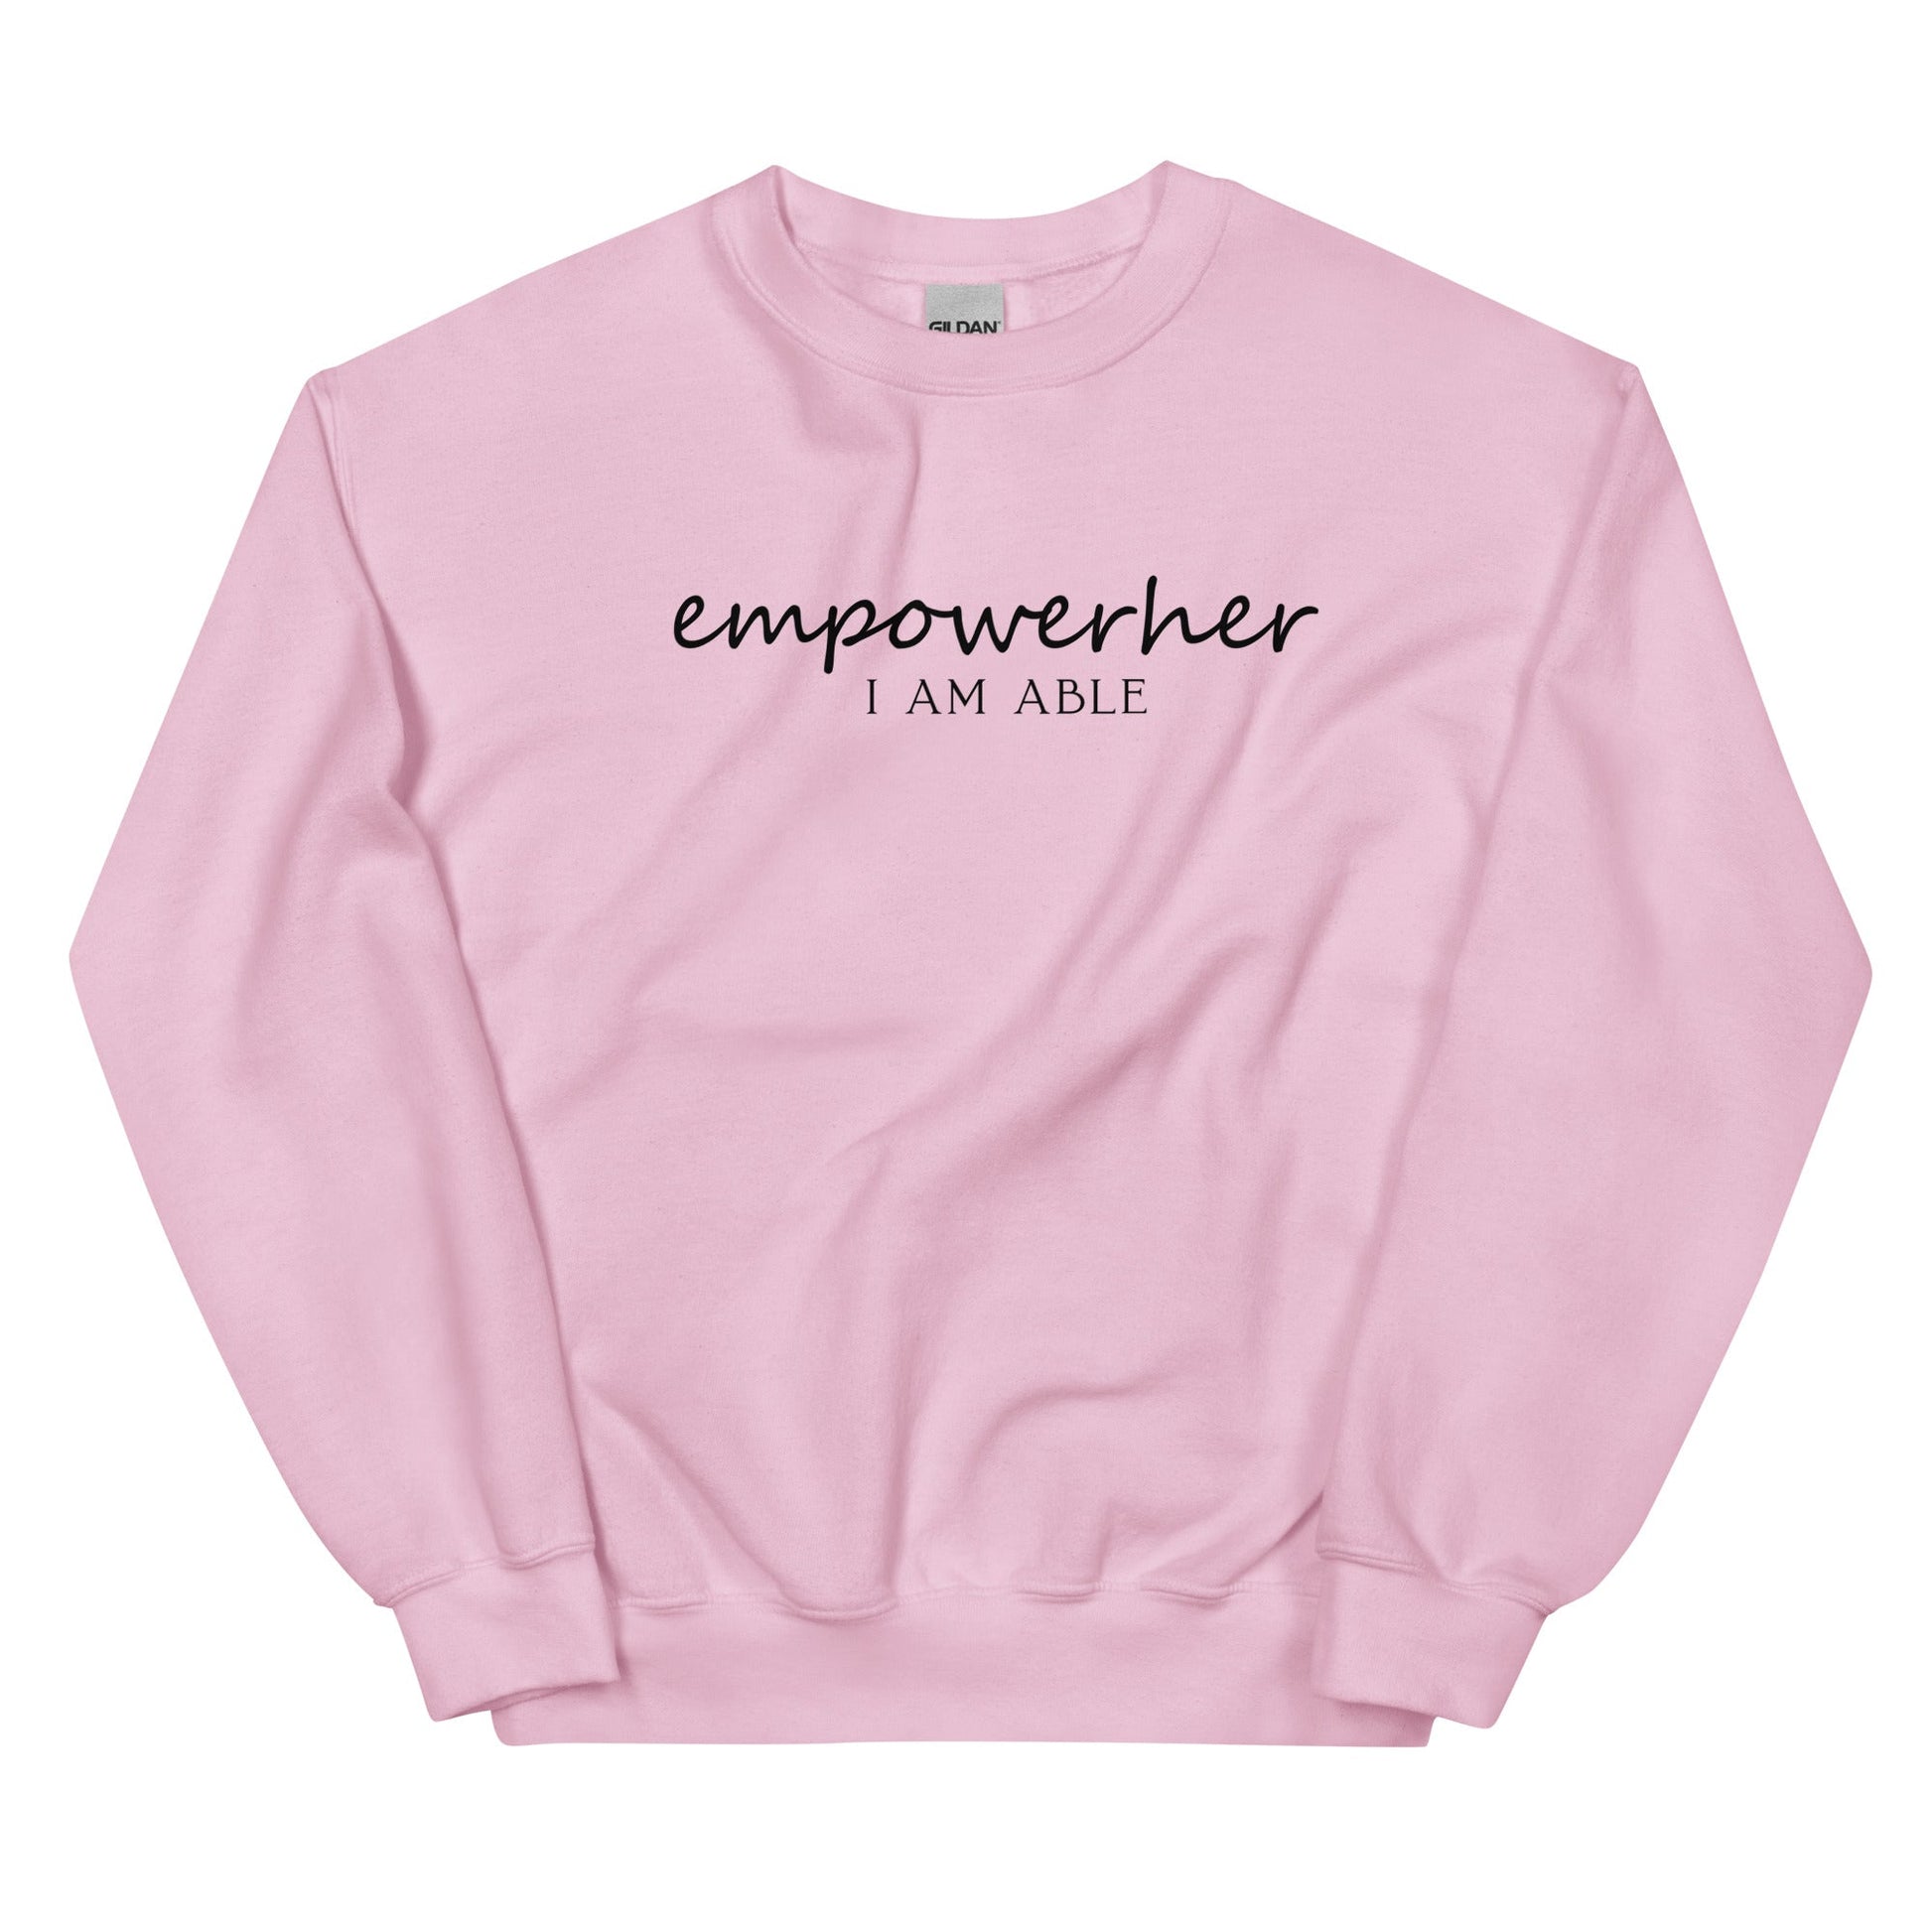 EmpowerHer I AM ABLE Sweatshirt - Light Pink / S